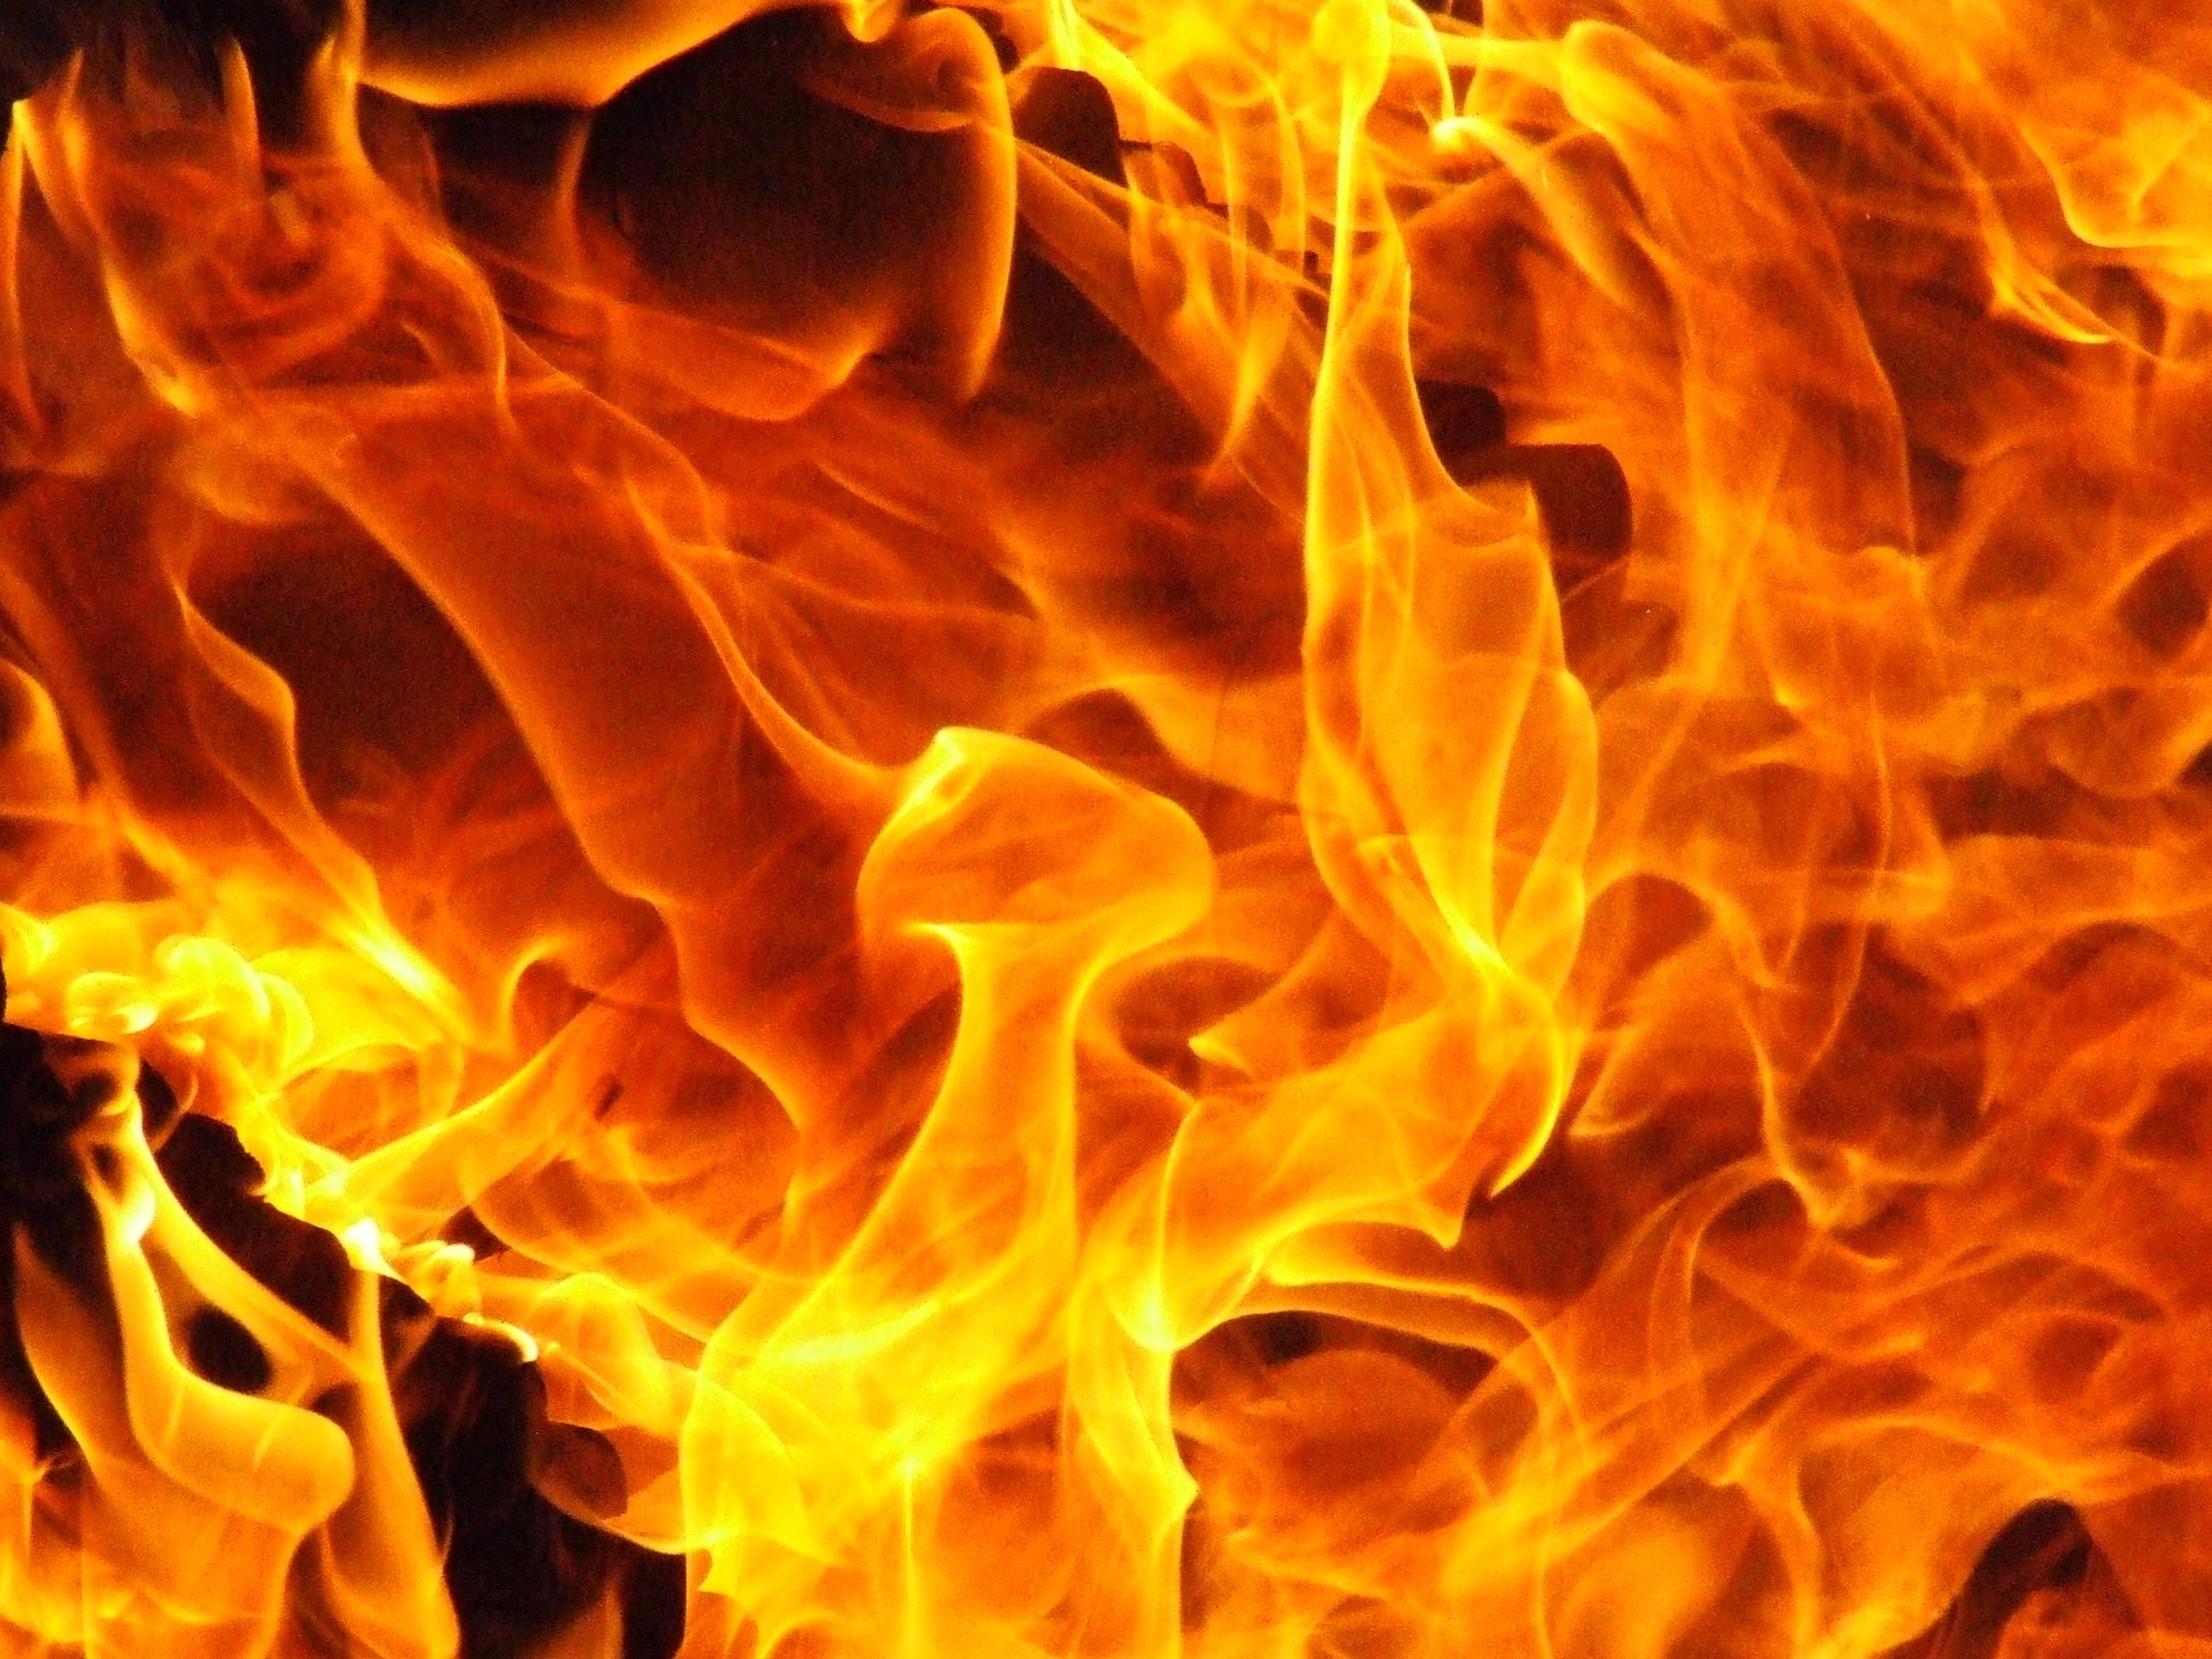 flame wallpaper,flame,fire,heat